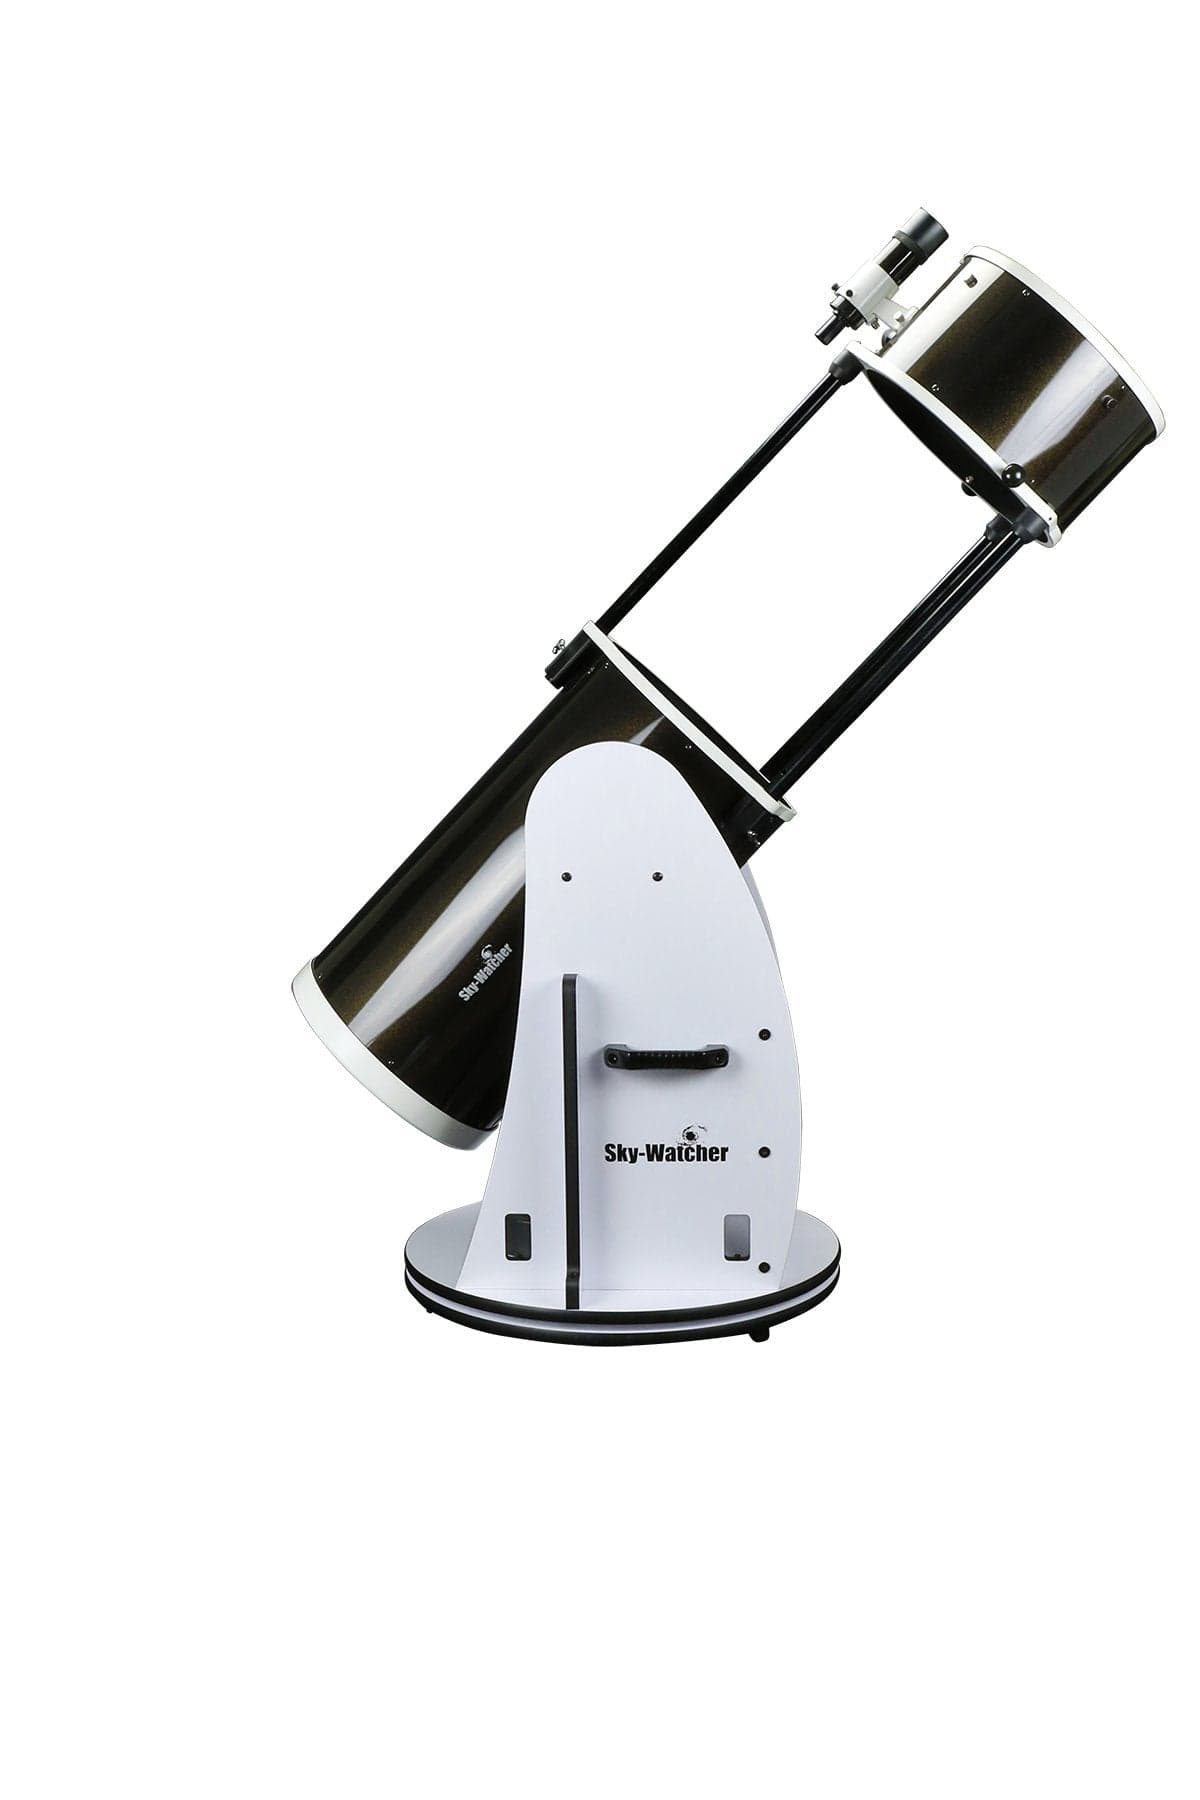 Sky-Watcher Telescope Sky-Watcher Flextube 300P 12" SynScan GoTo Collapsible Dobsonian